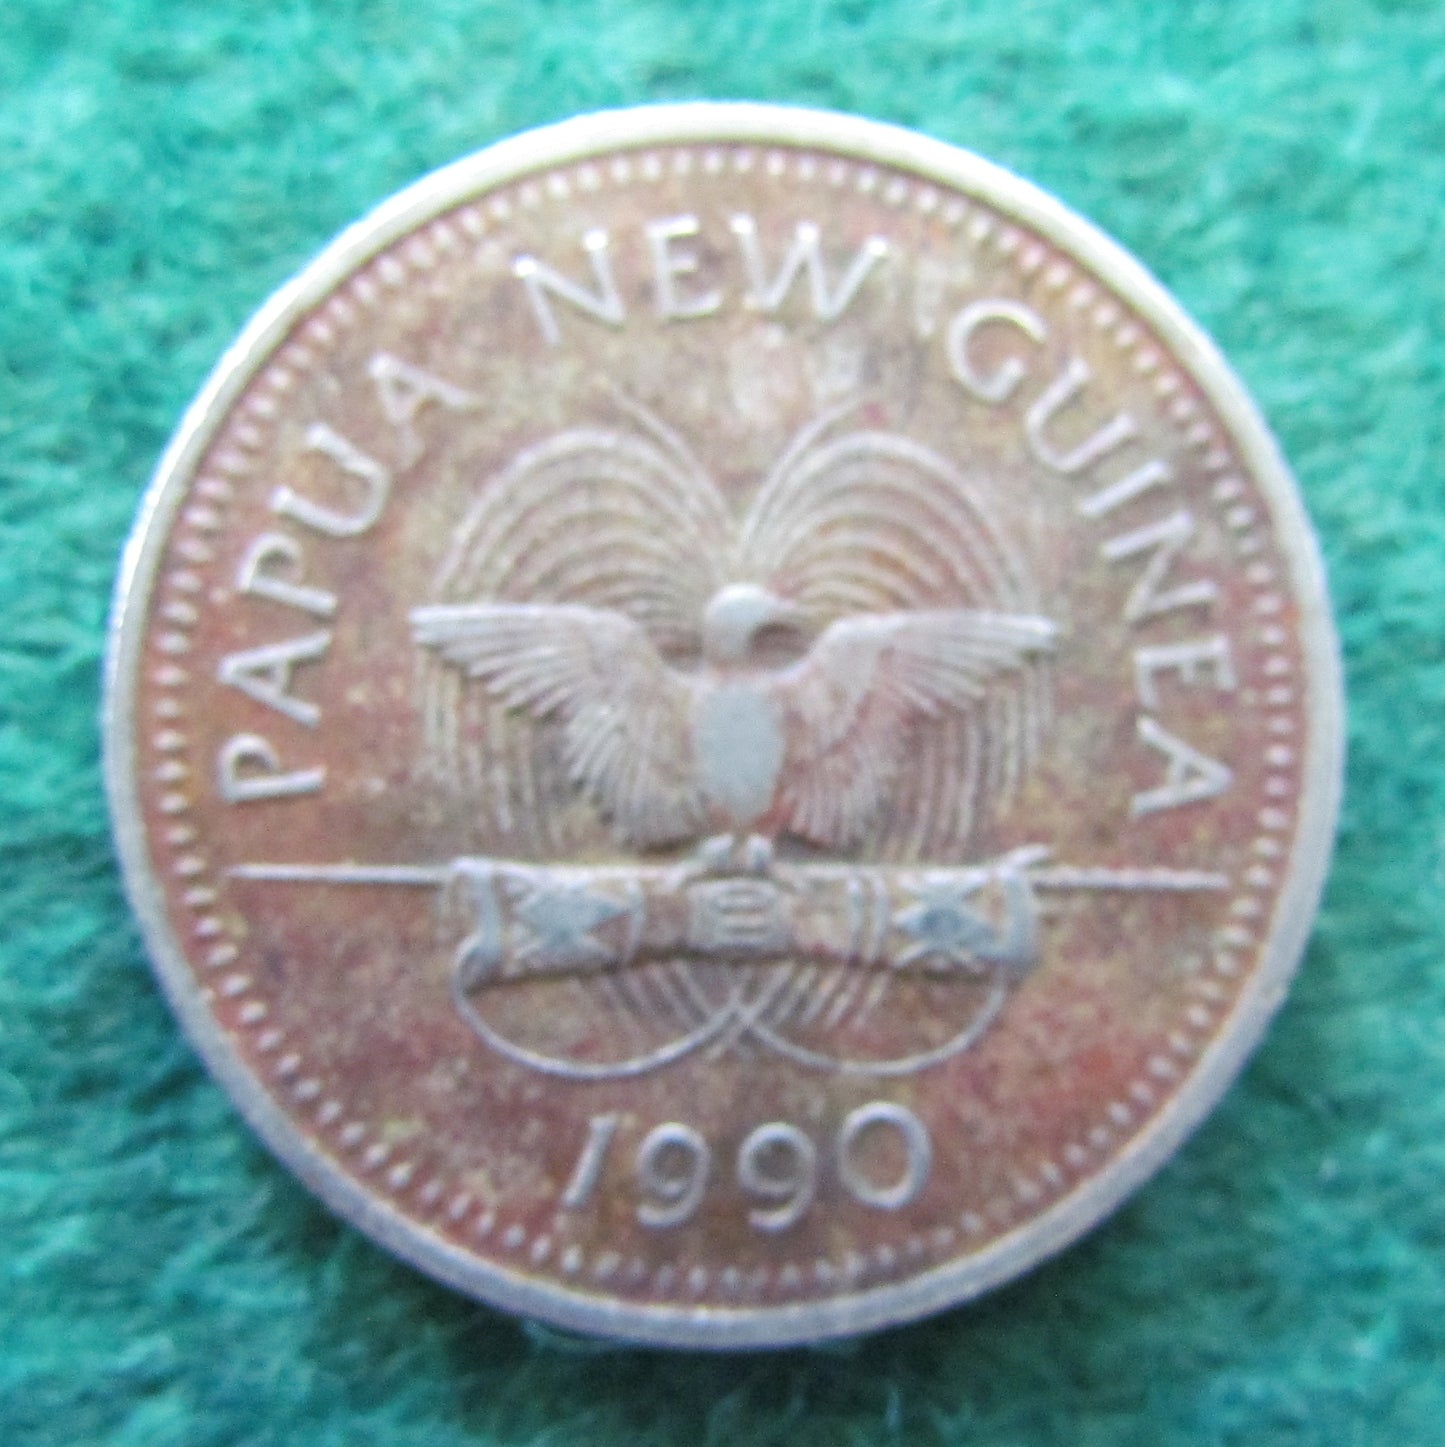 New Guinea 1990 20 Toea Coin - Circulated